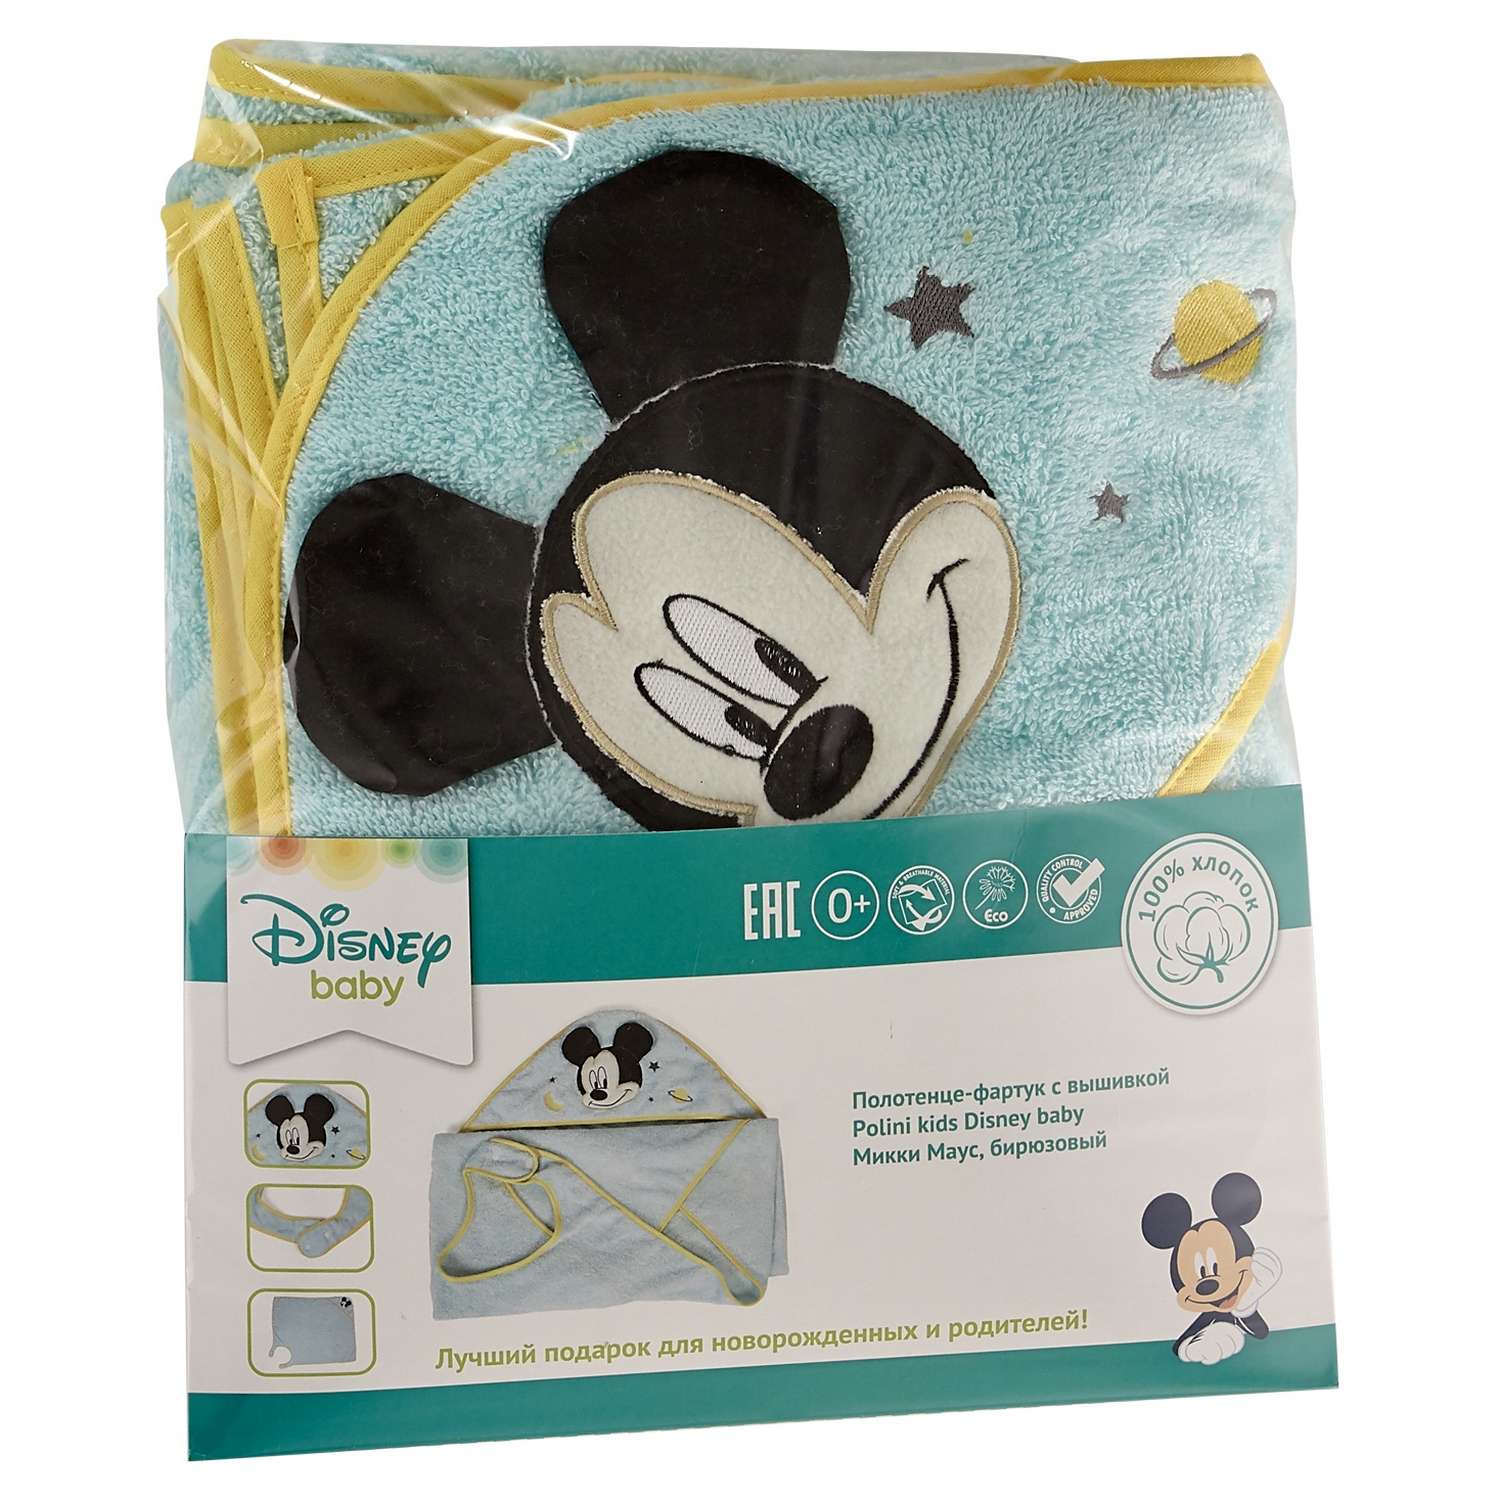 Полотенце-фартук Polini kids Disney baby Микки Маус c вышивкой Бирюзовый - фото 2